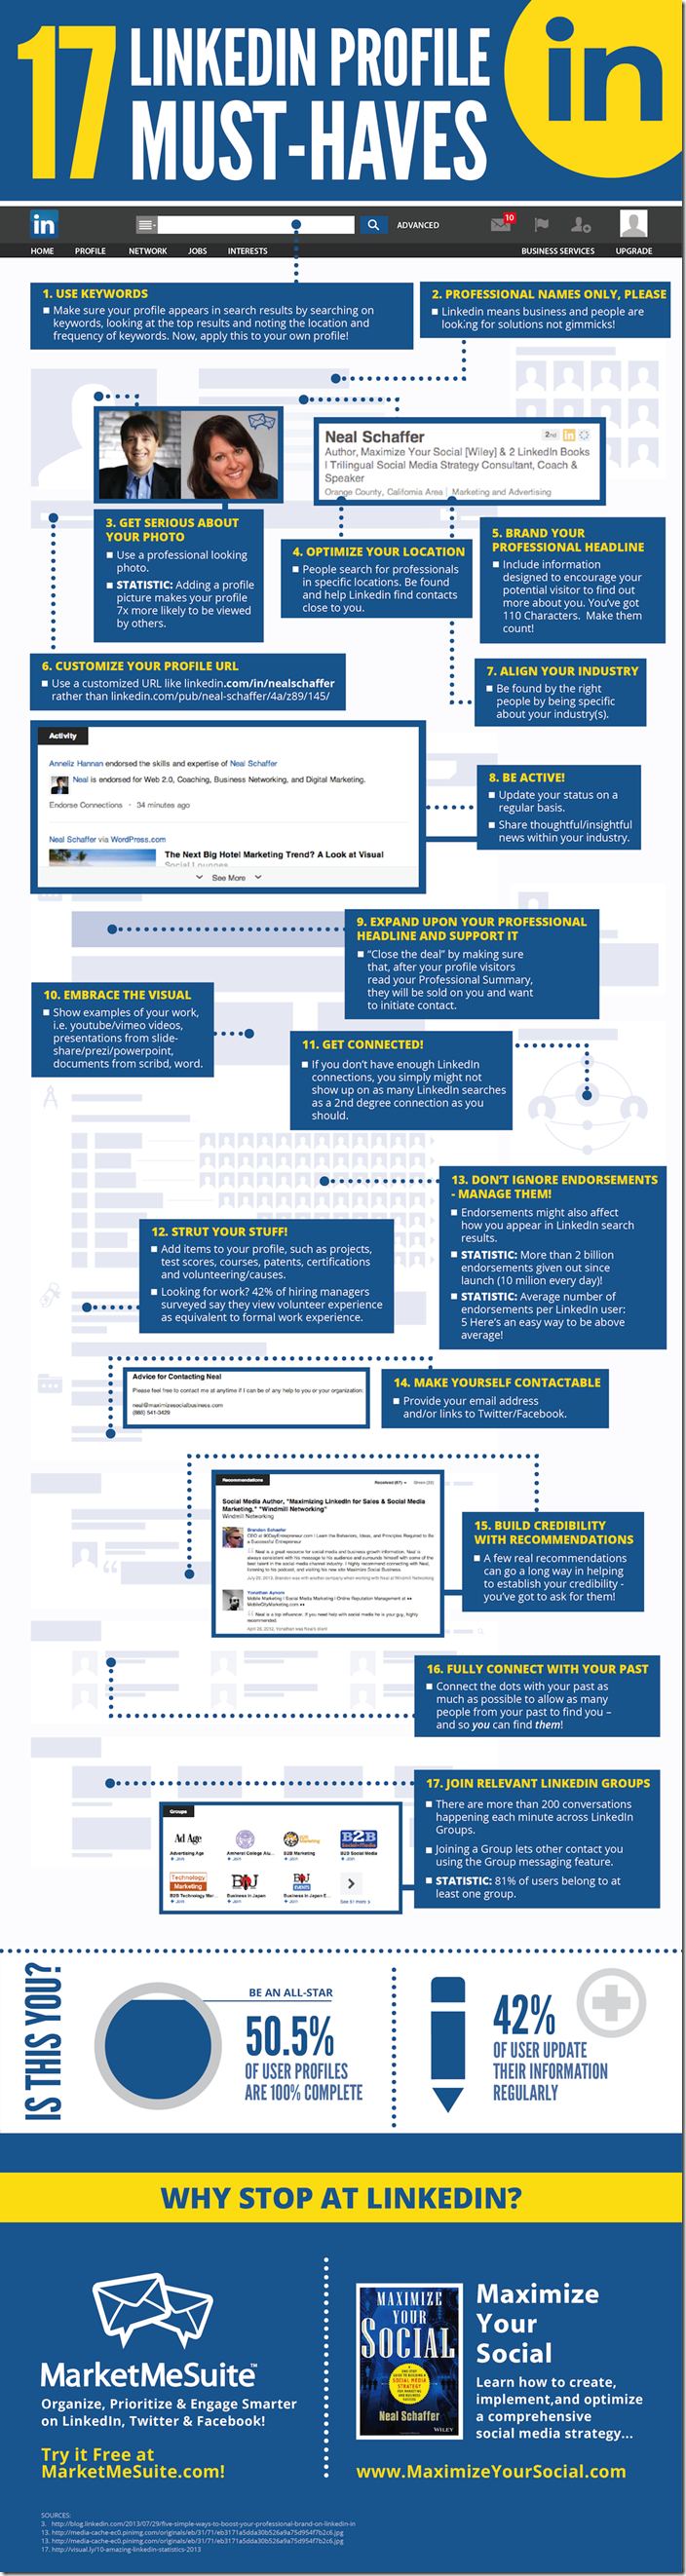 LinkedIn-Perfect-Profile-Tips-Summary-Infographic-11